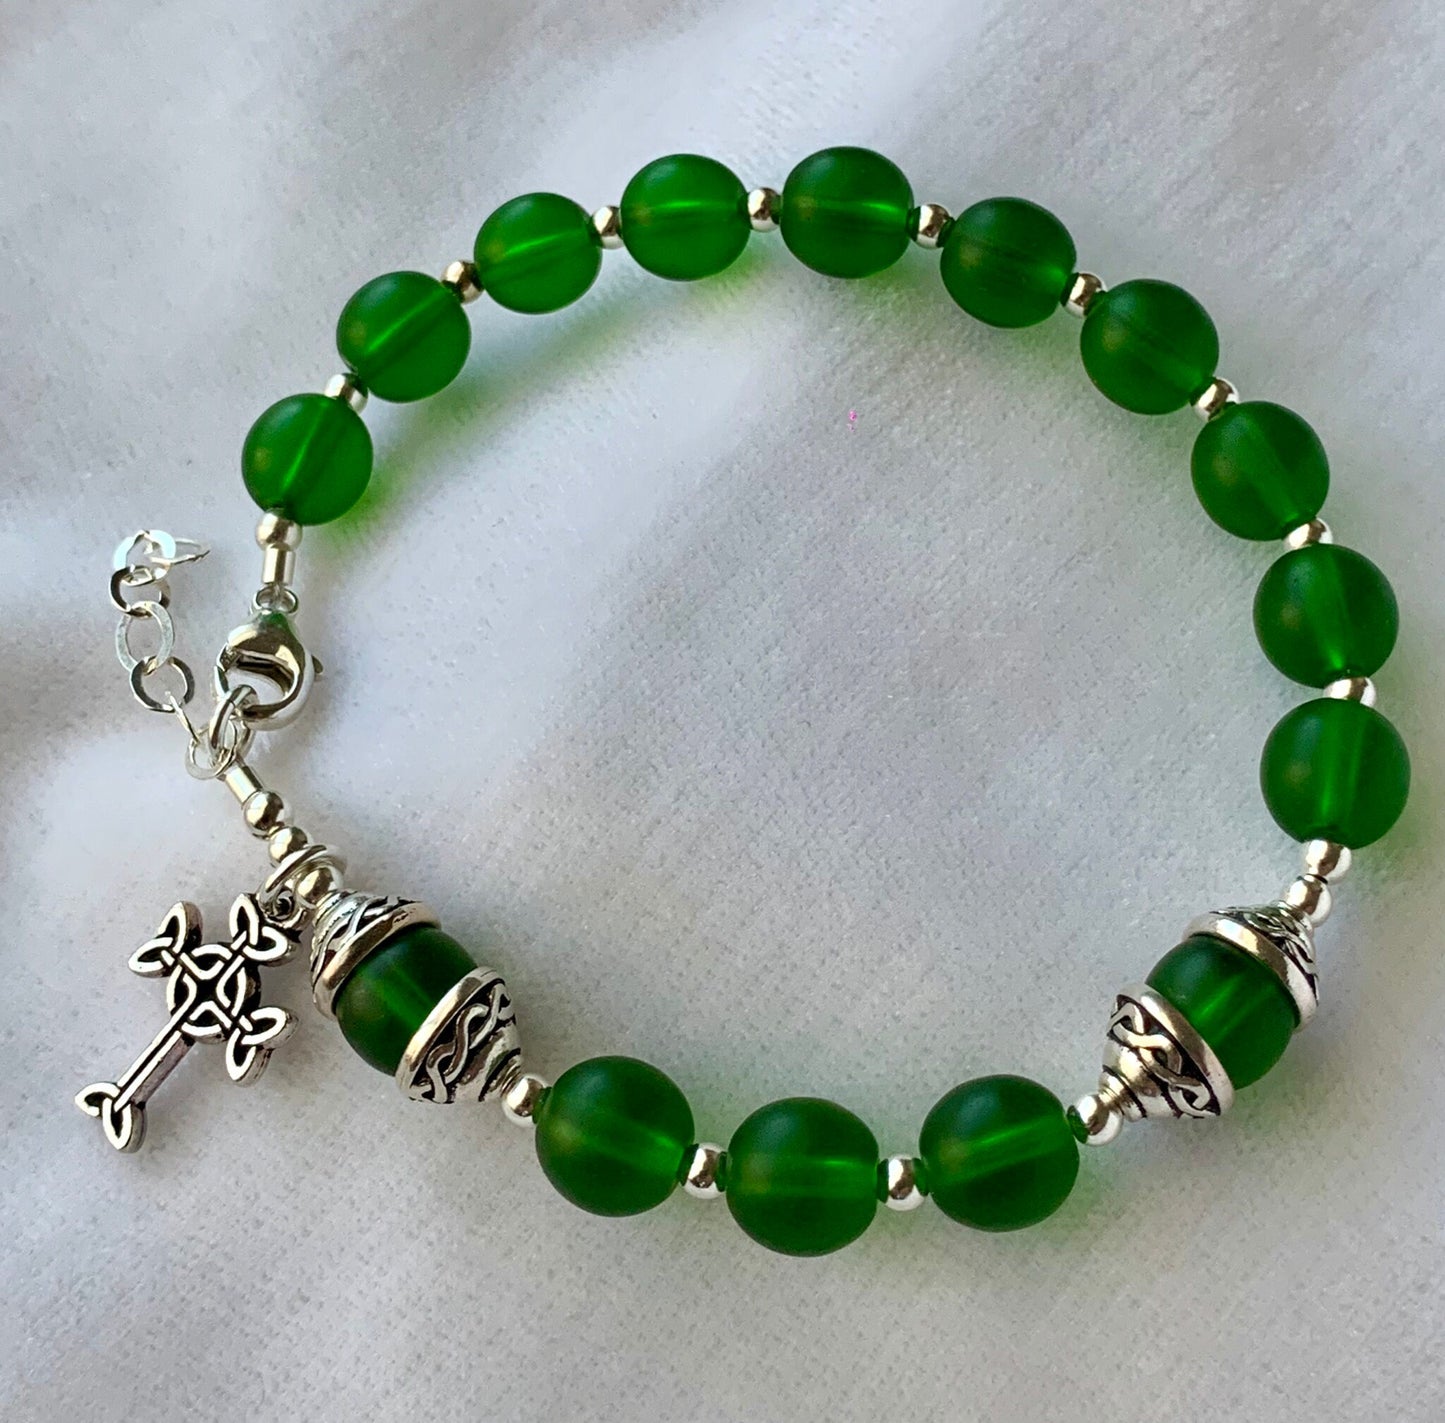 Green Celtic Sea Glass Rosary Bracelet,Celtic Rosary Bracelet,One Decade Rosary Bracelet, Celtic Irish Knot Rosary Bracelet, First Communion